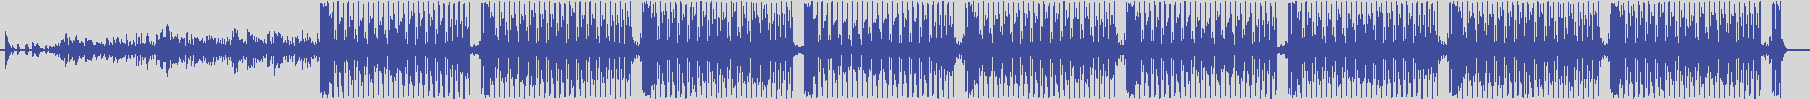 nf_boyz_records [NFY027] Beach Coffee Ensemble - Sospicius Area [Deep Island Mix] audio wave form